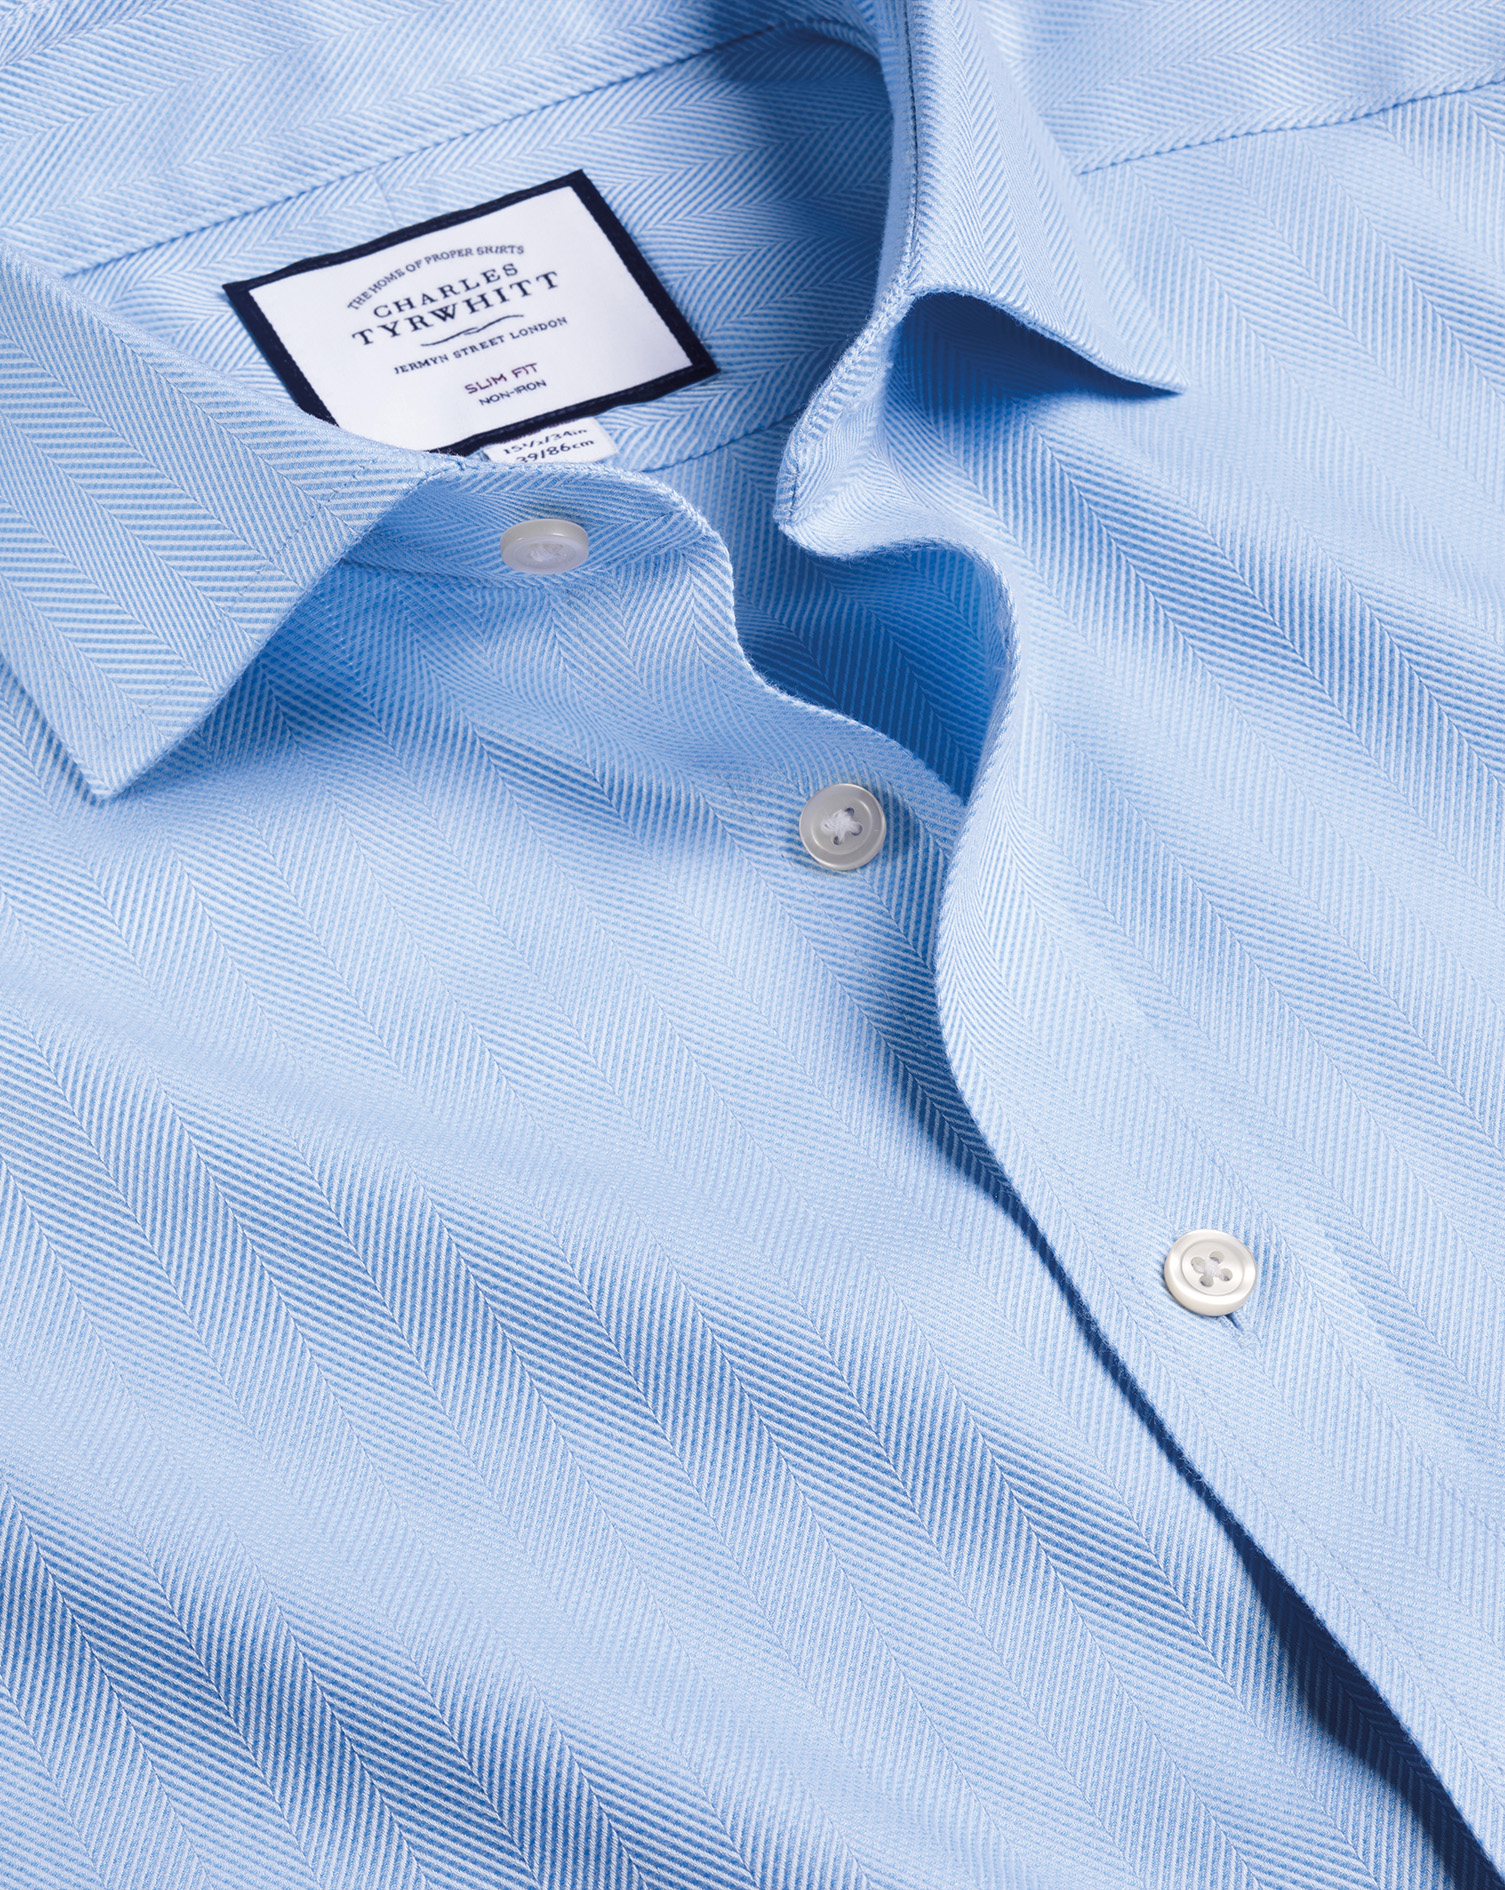 Men's Charles Tyrwhitt Cutaway Collar Non-Iron Herringbone Dress Shirt - Sky Blue French Cuff Size M